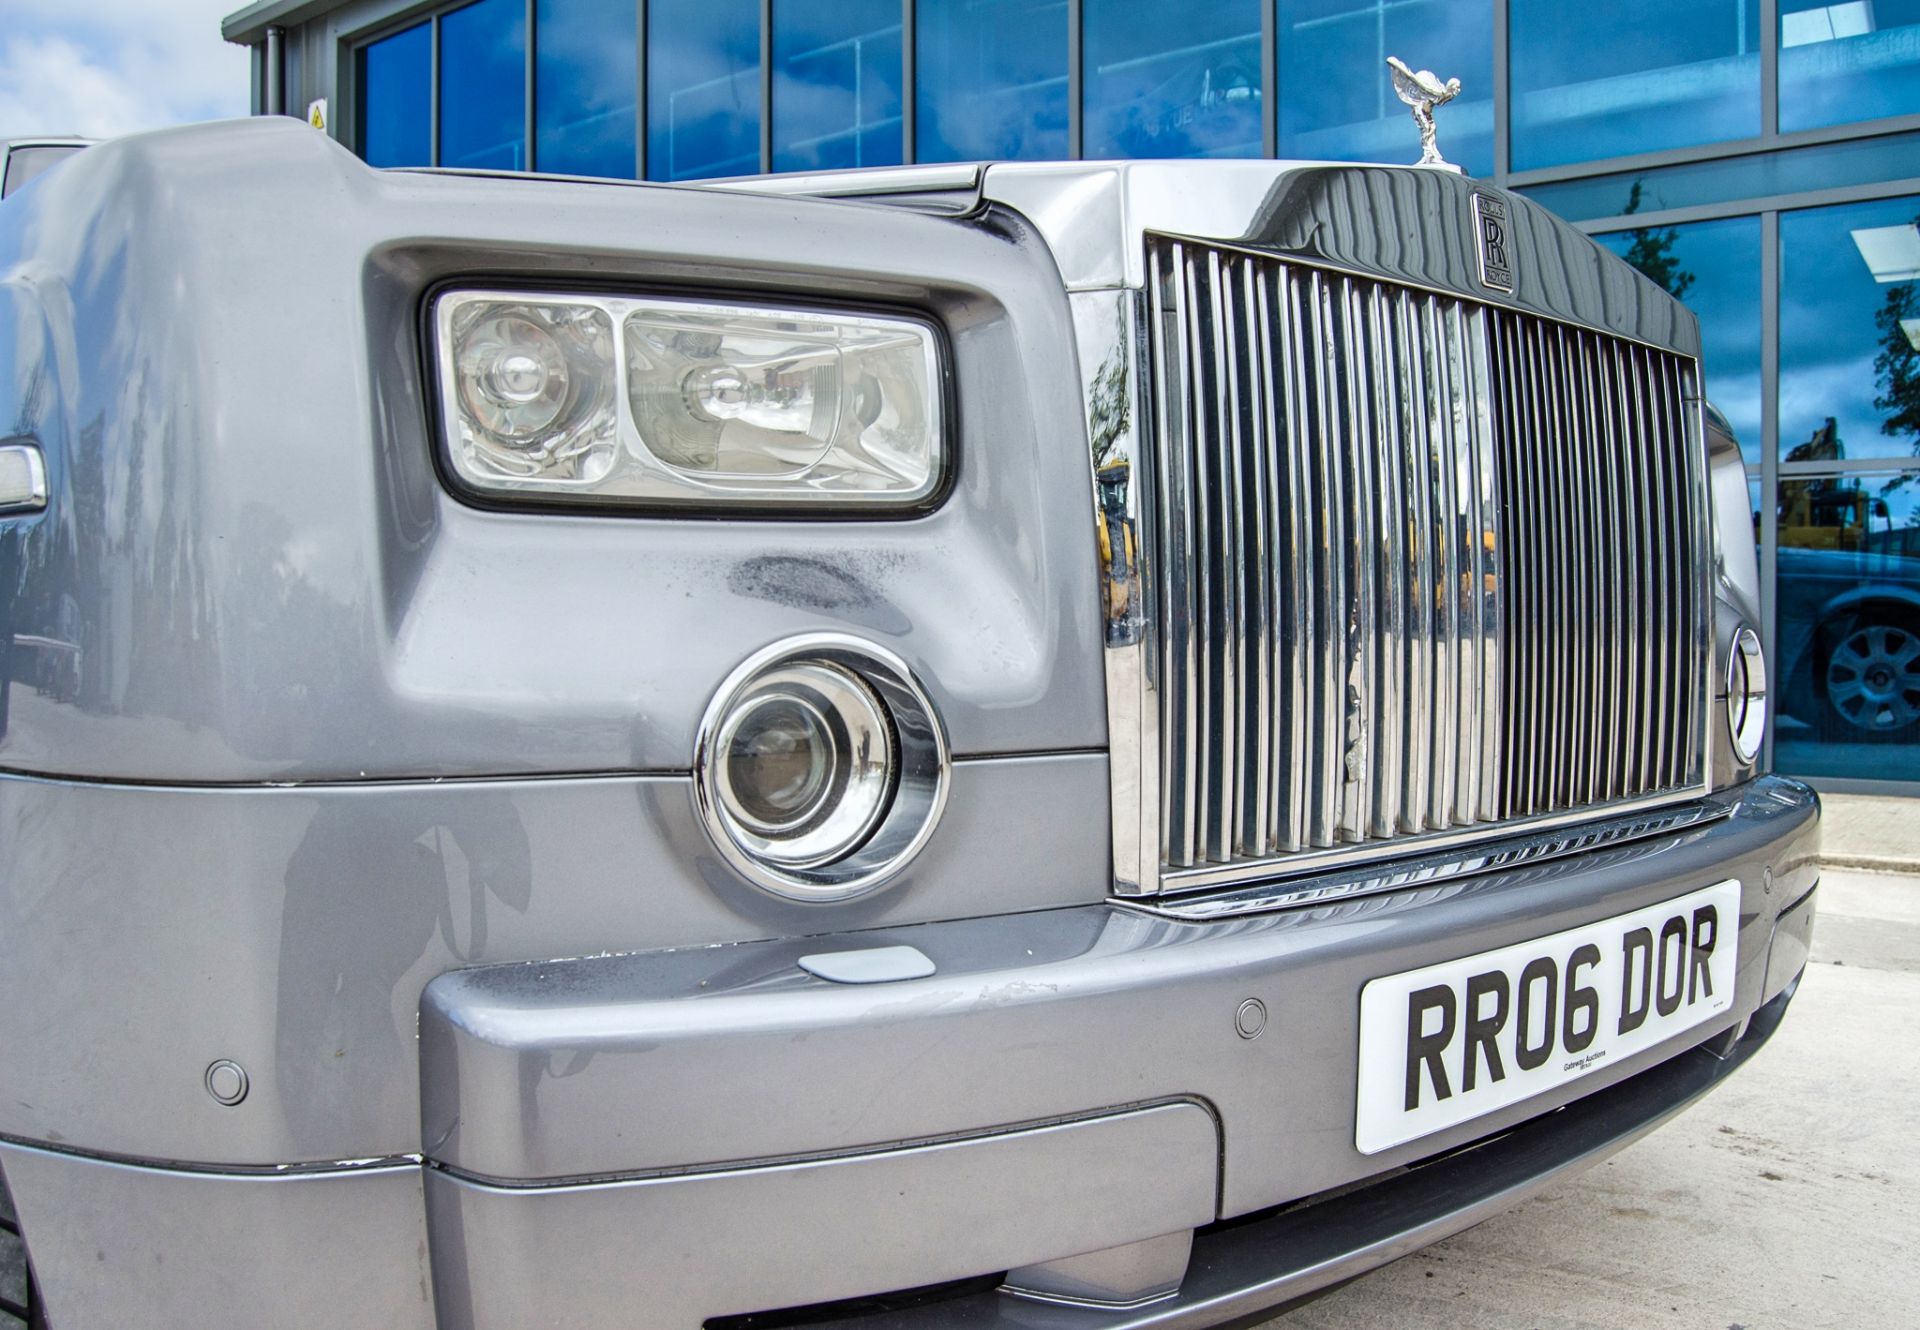 Rolls Royce Phantom 6749cc V12 Auto 4 door saloon car Registration Number: RR06 DOR Date of - Image 18 of 59